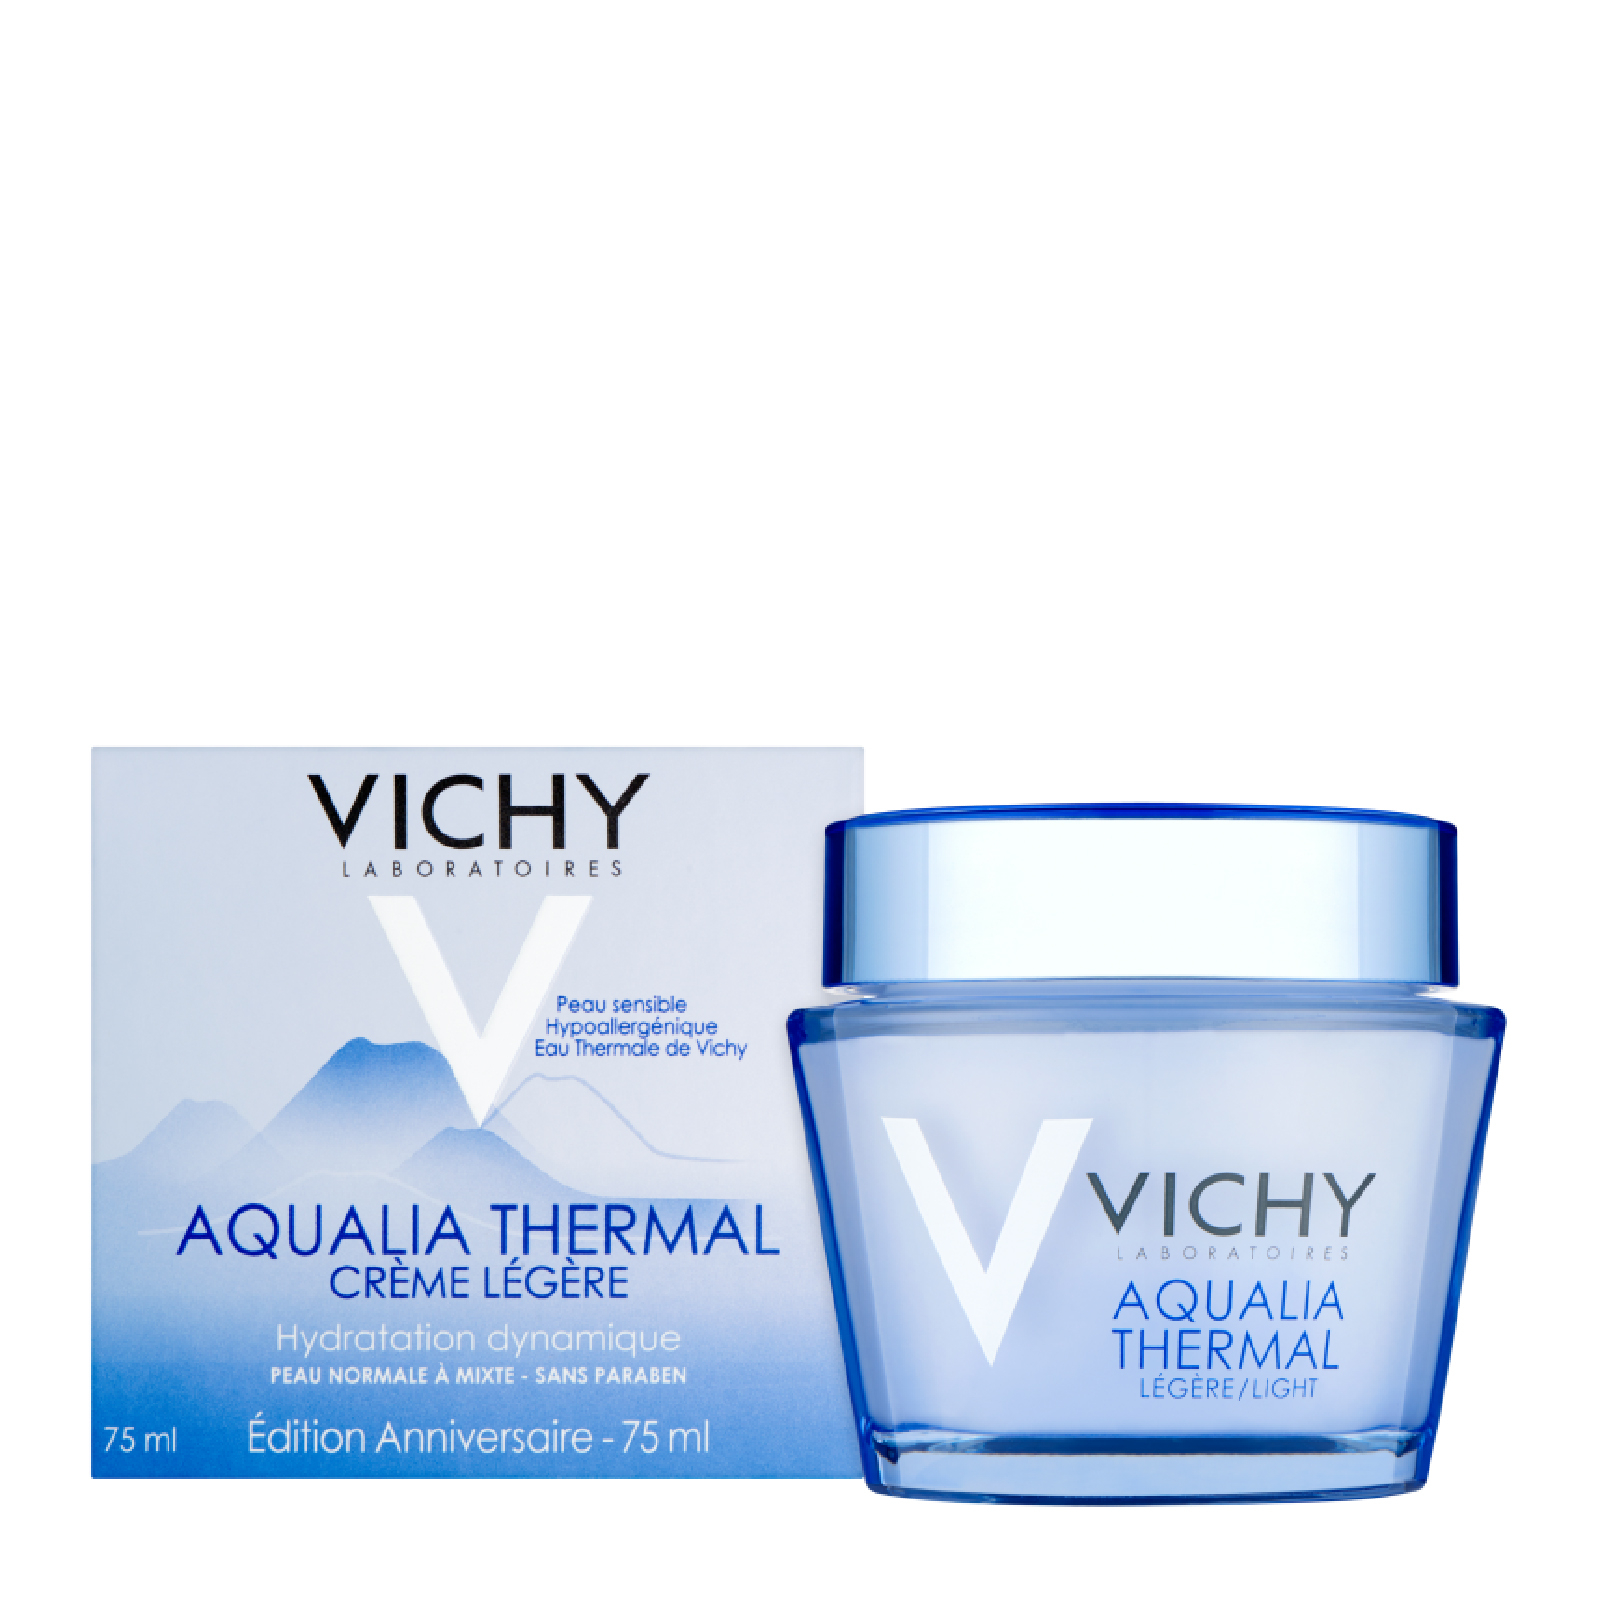 Vichy aqualia thermal legere light